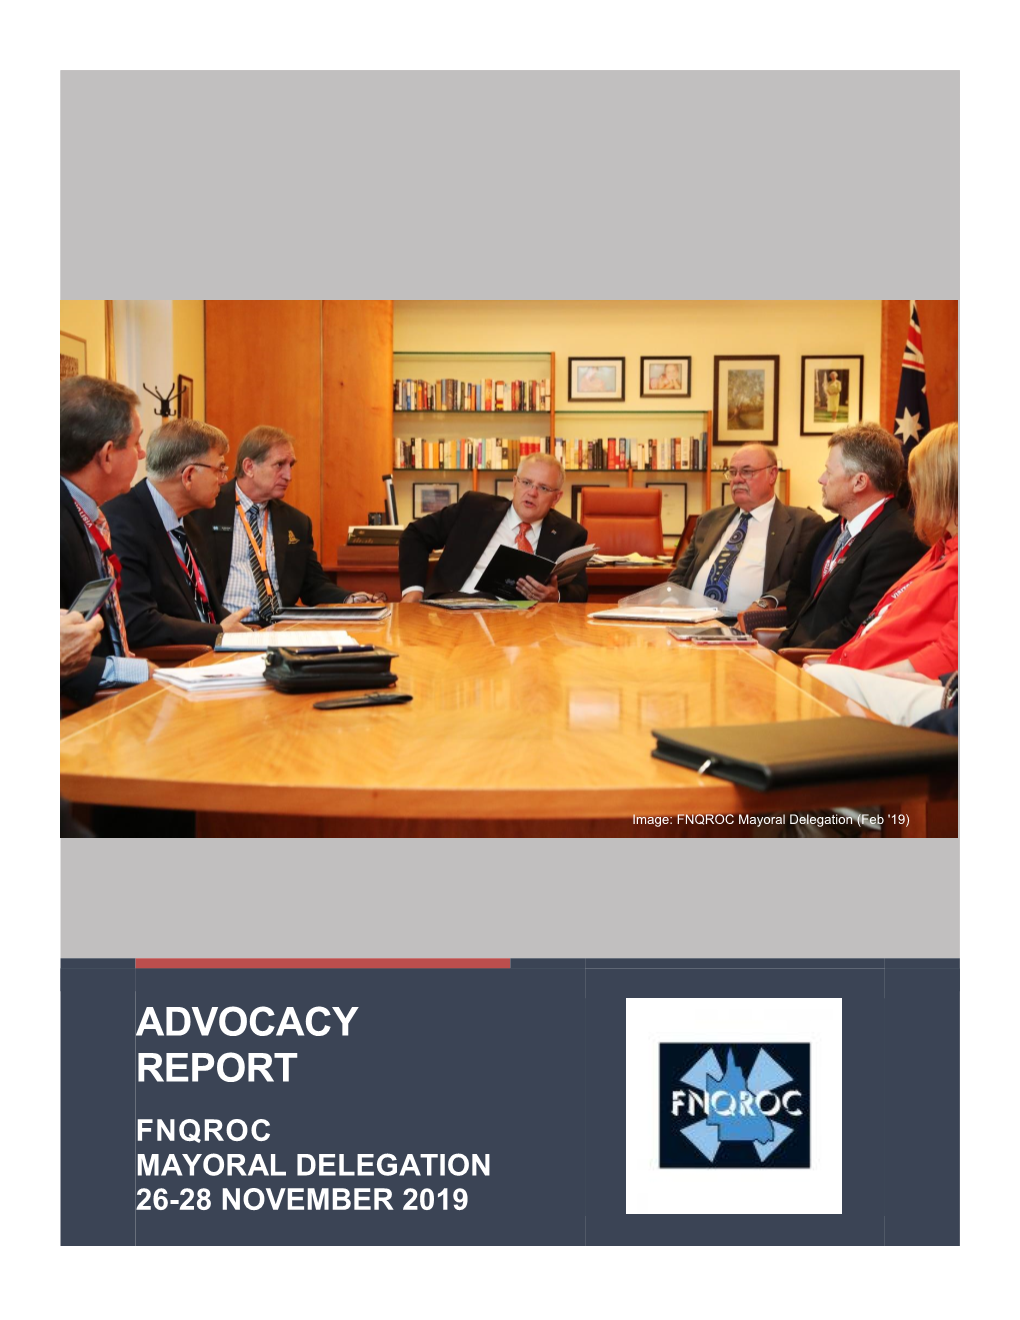 Advocacy Report Fnqroc Mayoral Delegation 26-28 November 2019